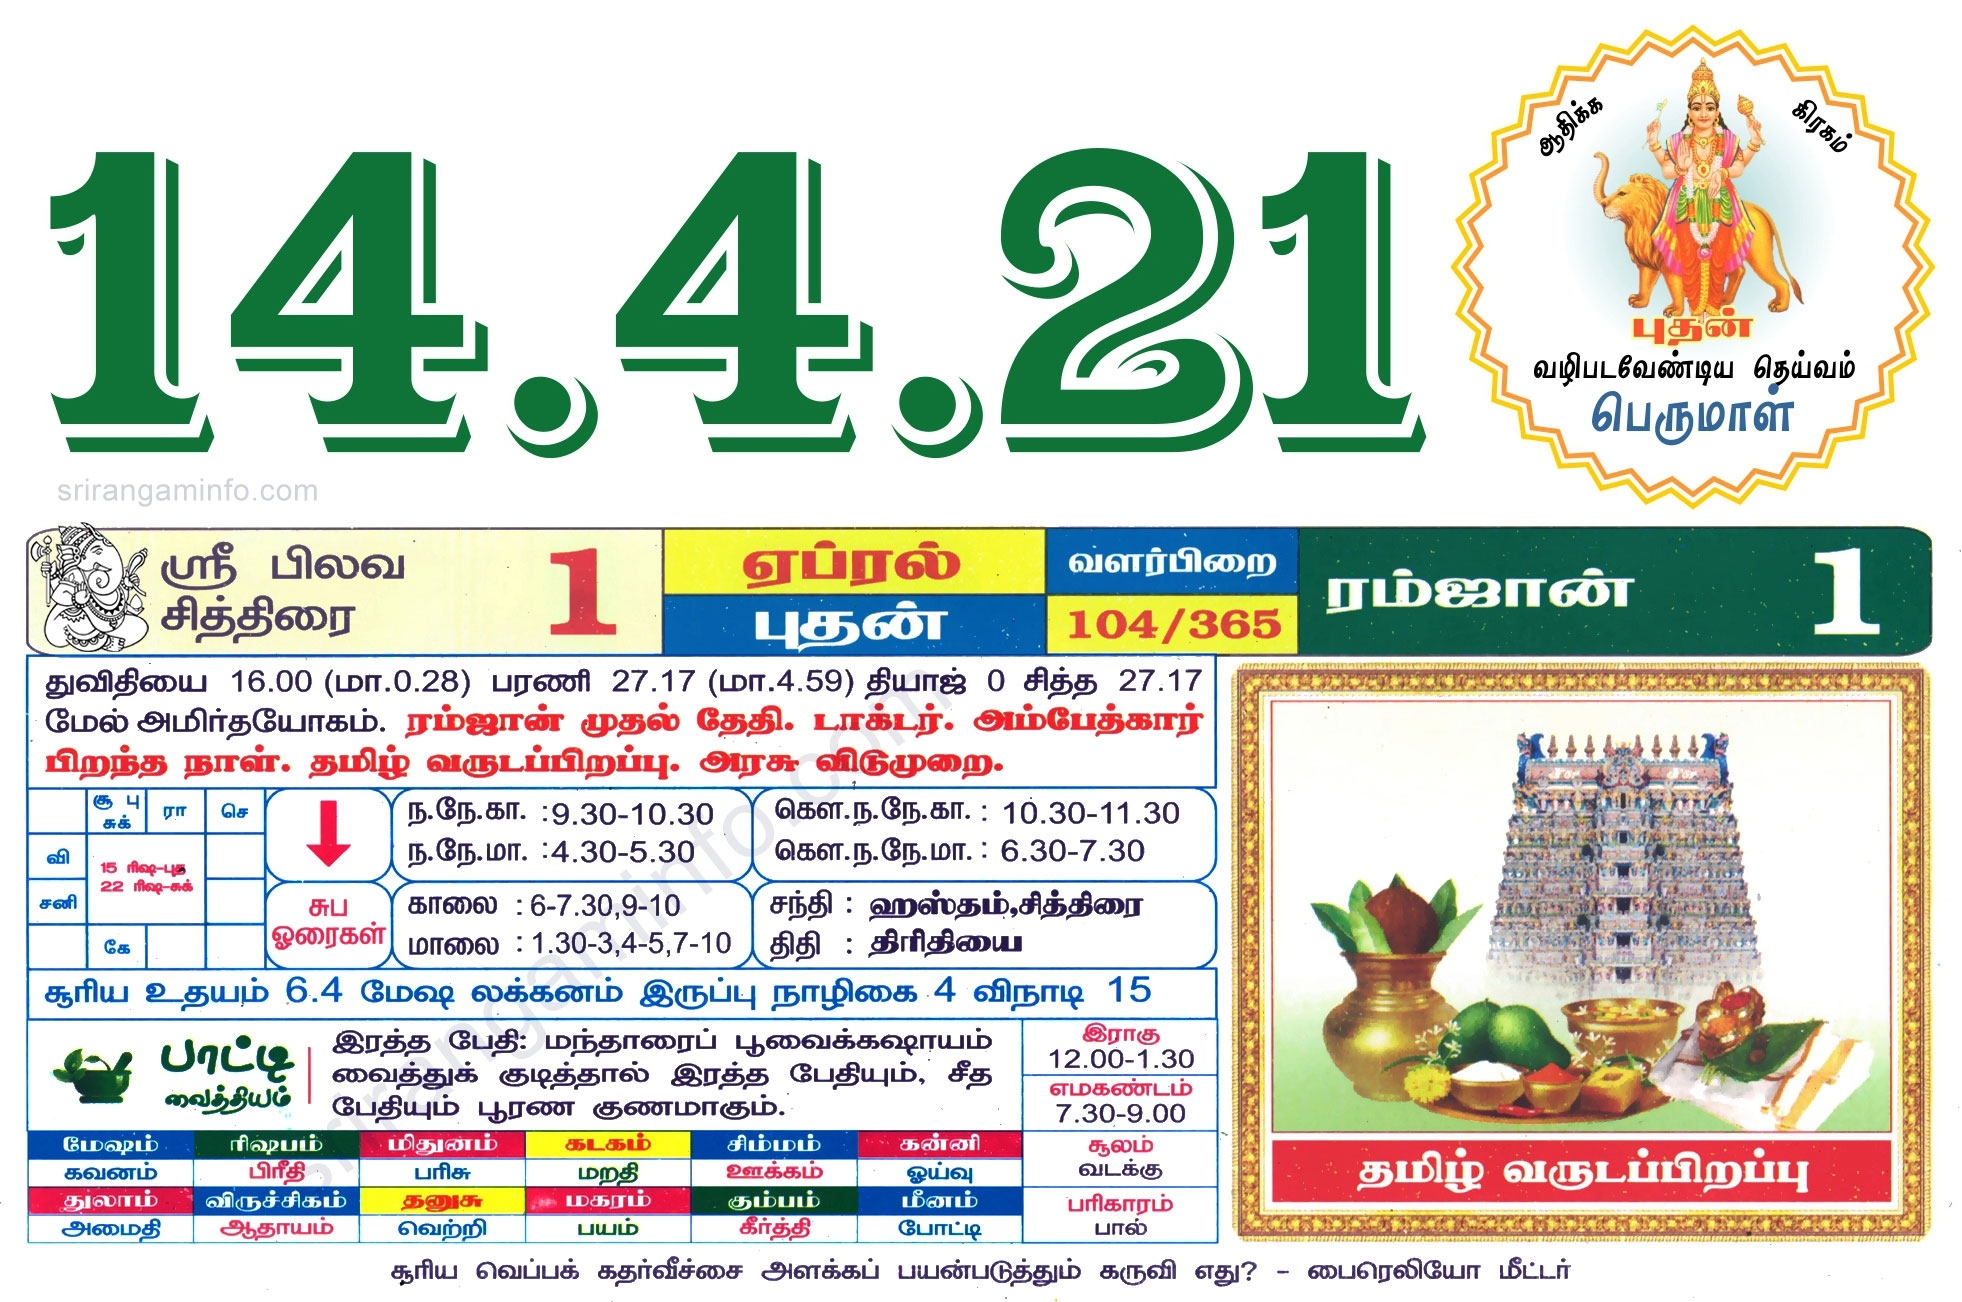 Tamil Daily Calendar 2021, Tamil Calendar 2021, Nalla Neram - தமிழ் தினசரி காலண்டர் Tamil Daily Calendar 2021 September